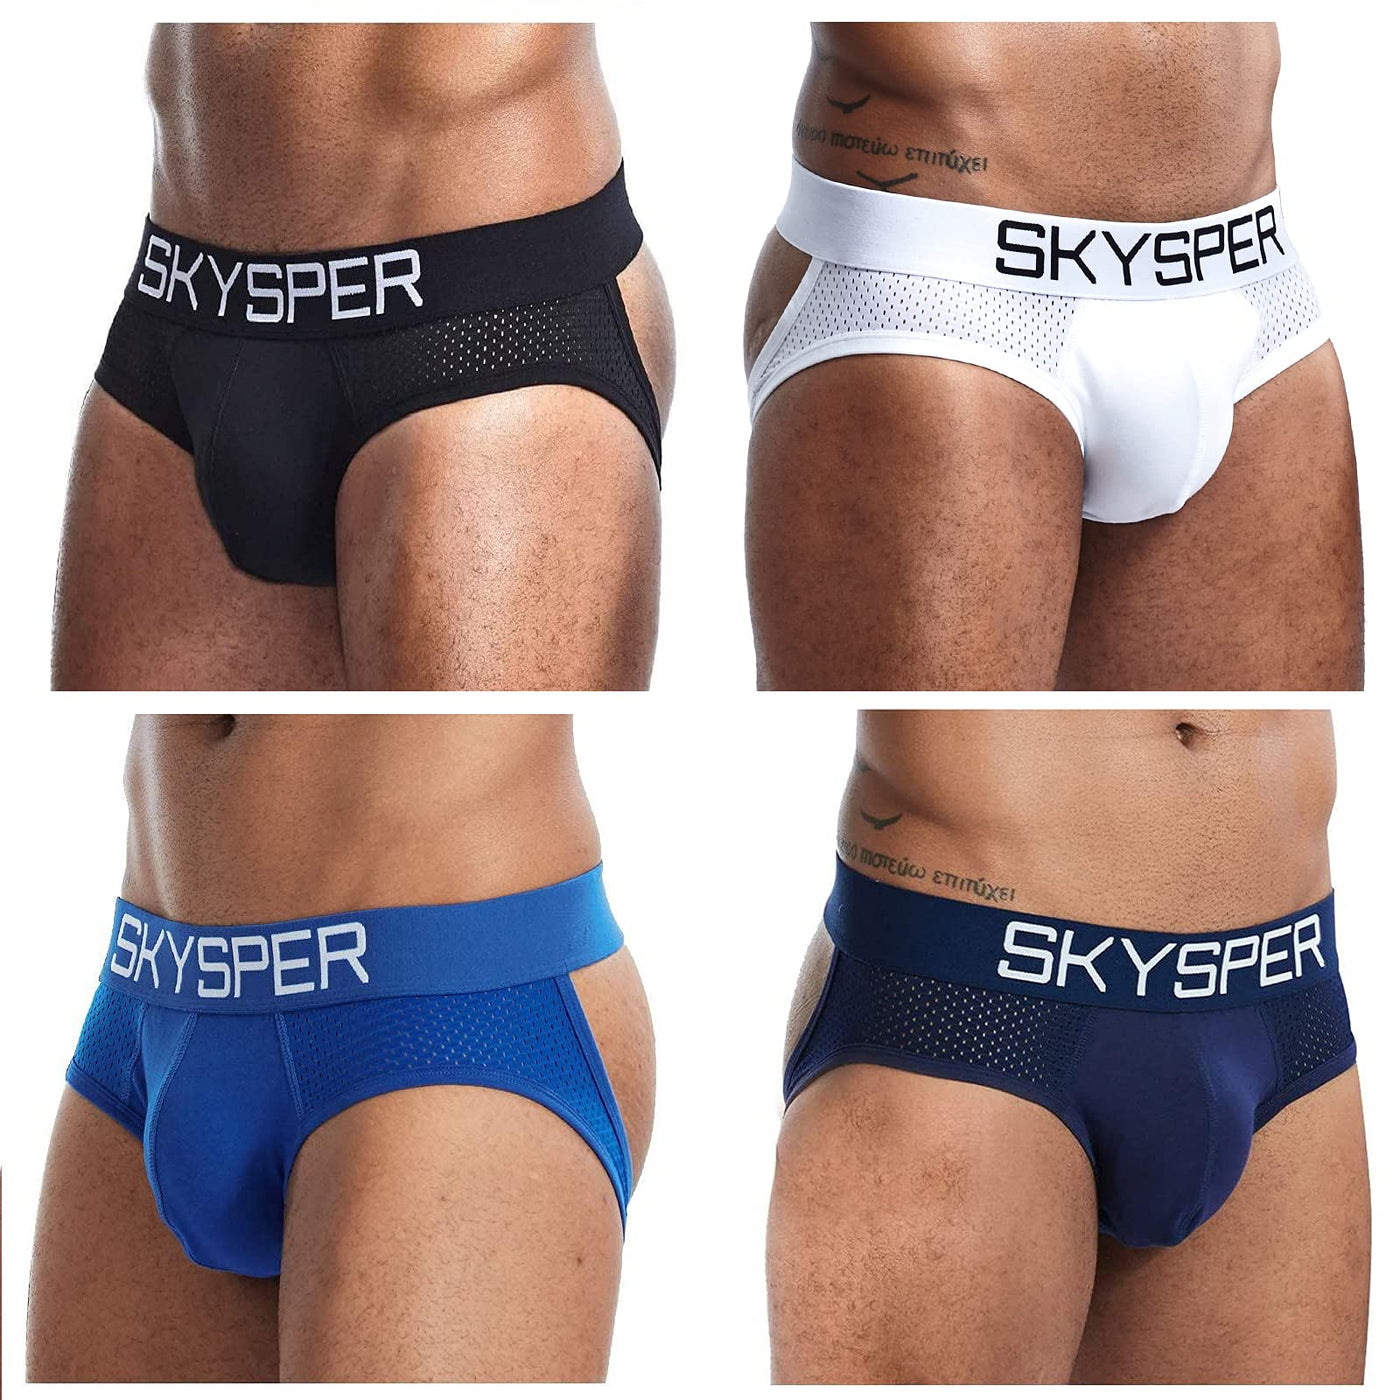 SKYSPER Men's Jockstrap Breathable Mesh Cotton Jock Straps Male Underwear, Athletic  Supporters for Men Sg07-4color/4pcs Small